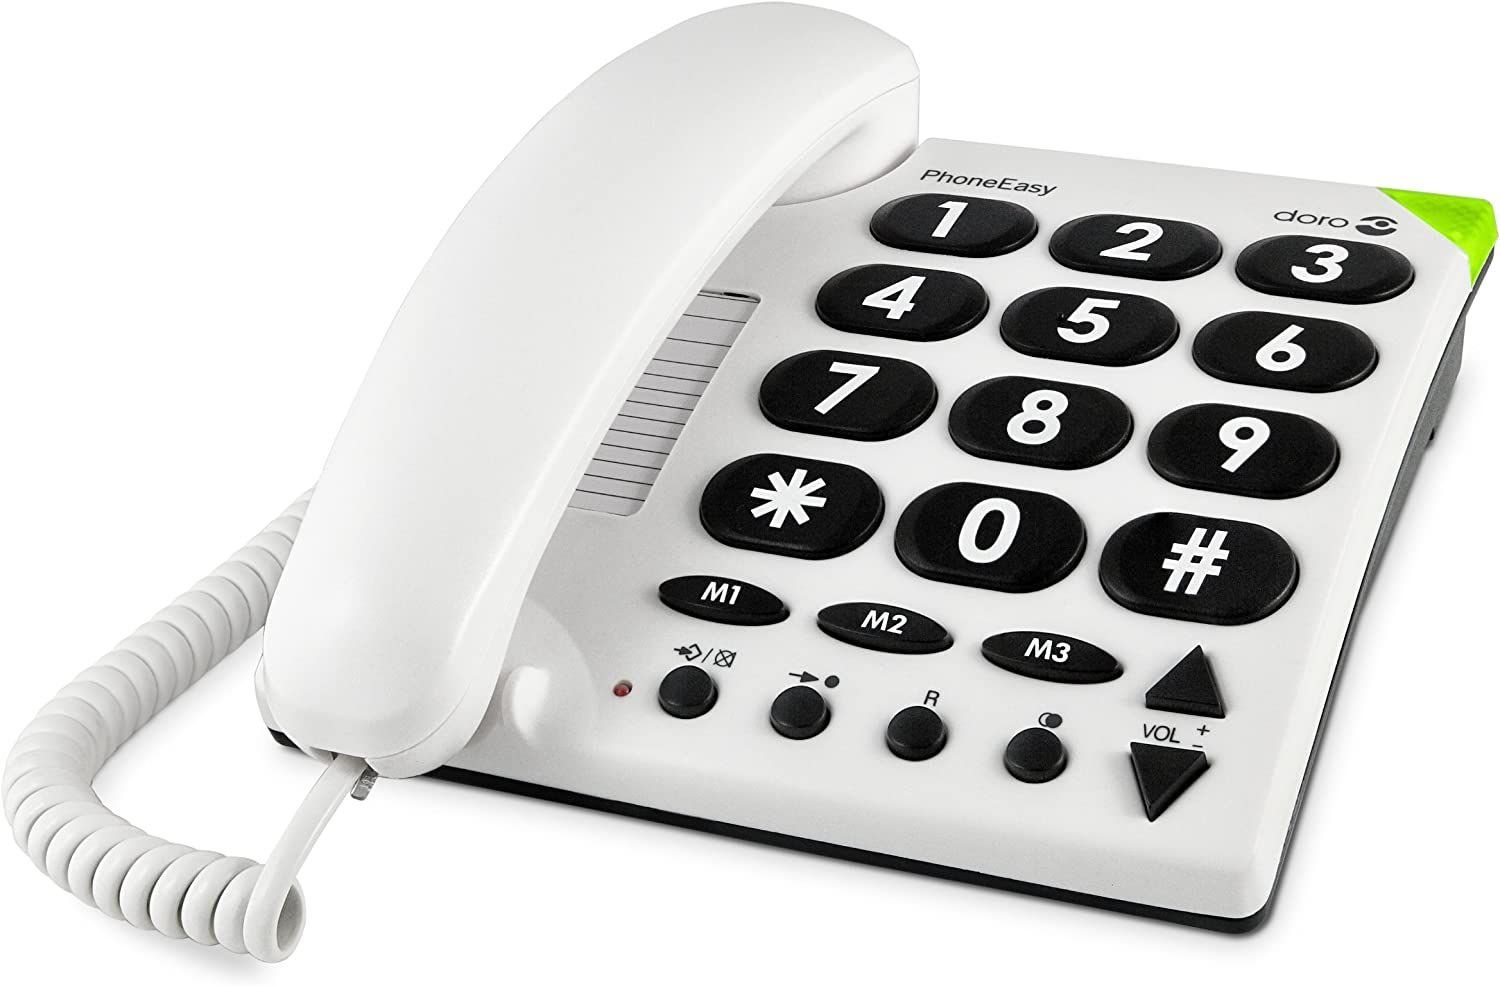 PhoneEasy Großtastentelefon 311c (Hörgerätekompatibilität) Doro